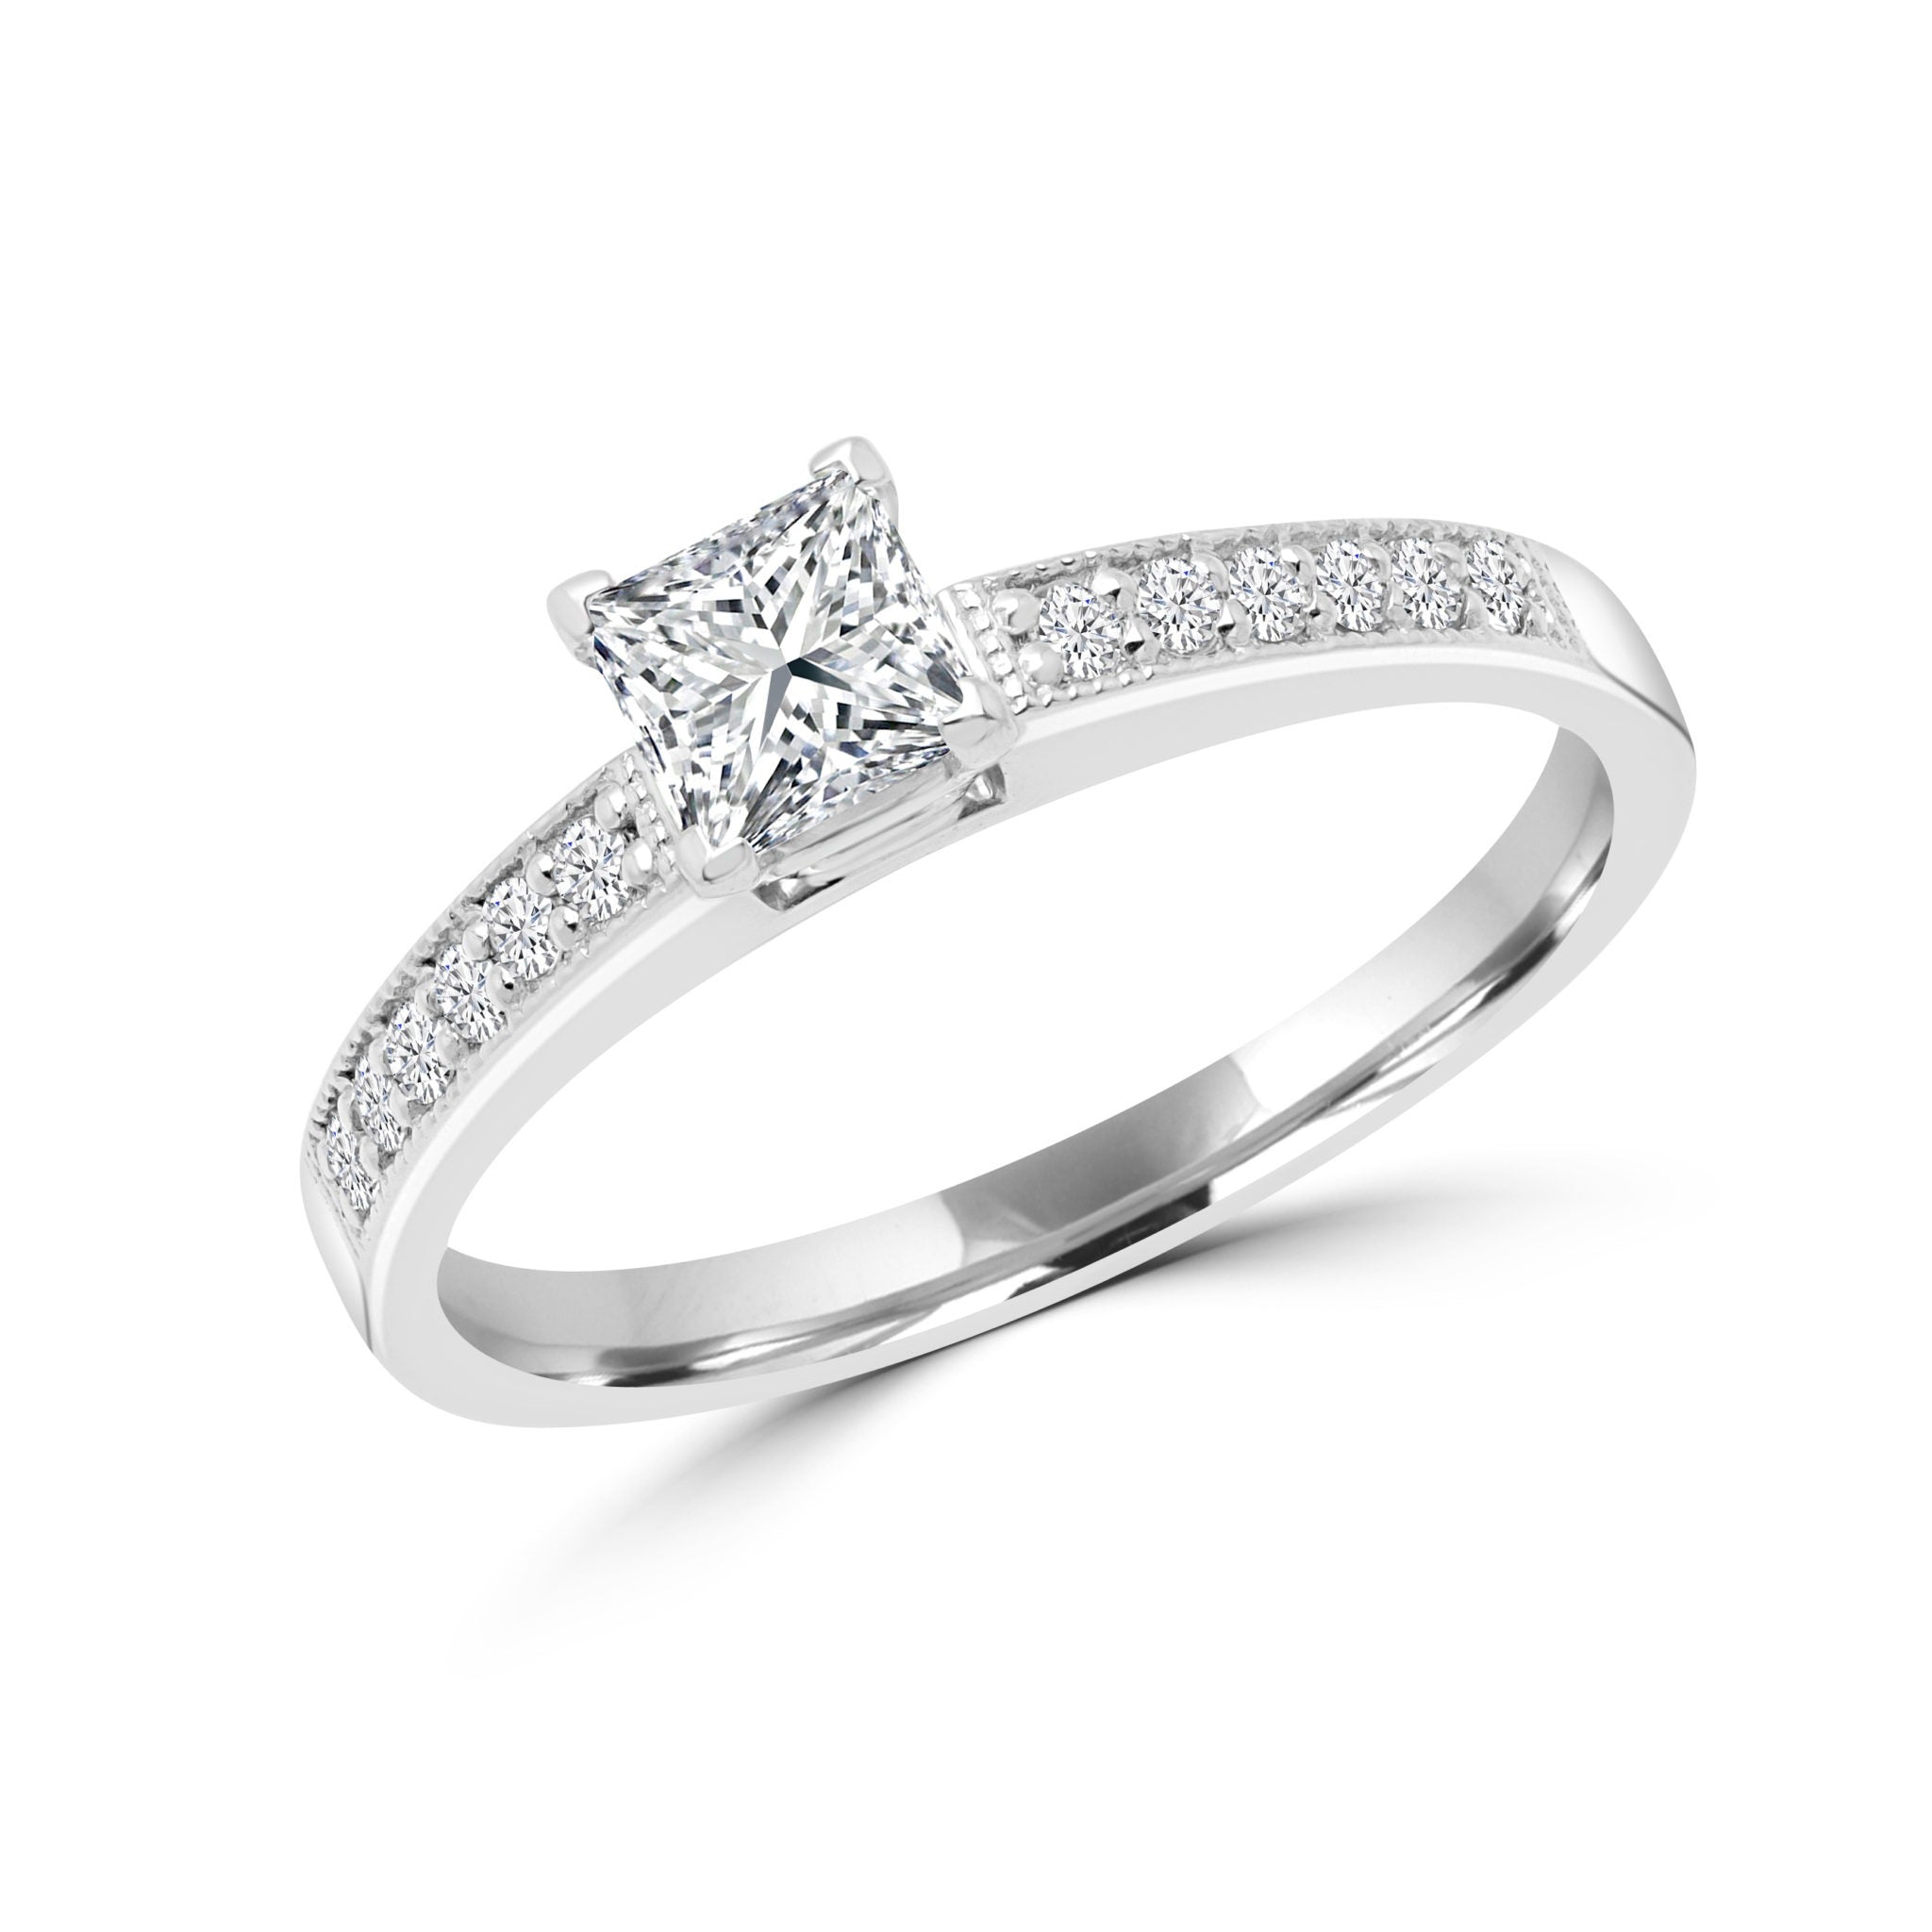 Princess cut lab-grown solitaire diamond ring 0.64 (ctw) 14k gold